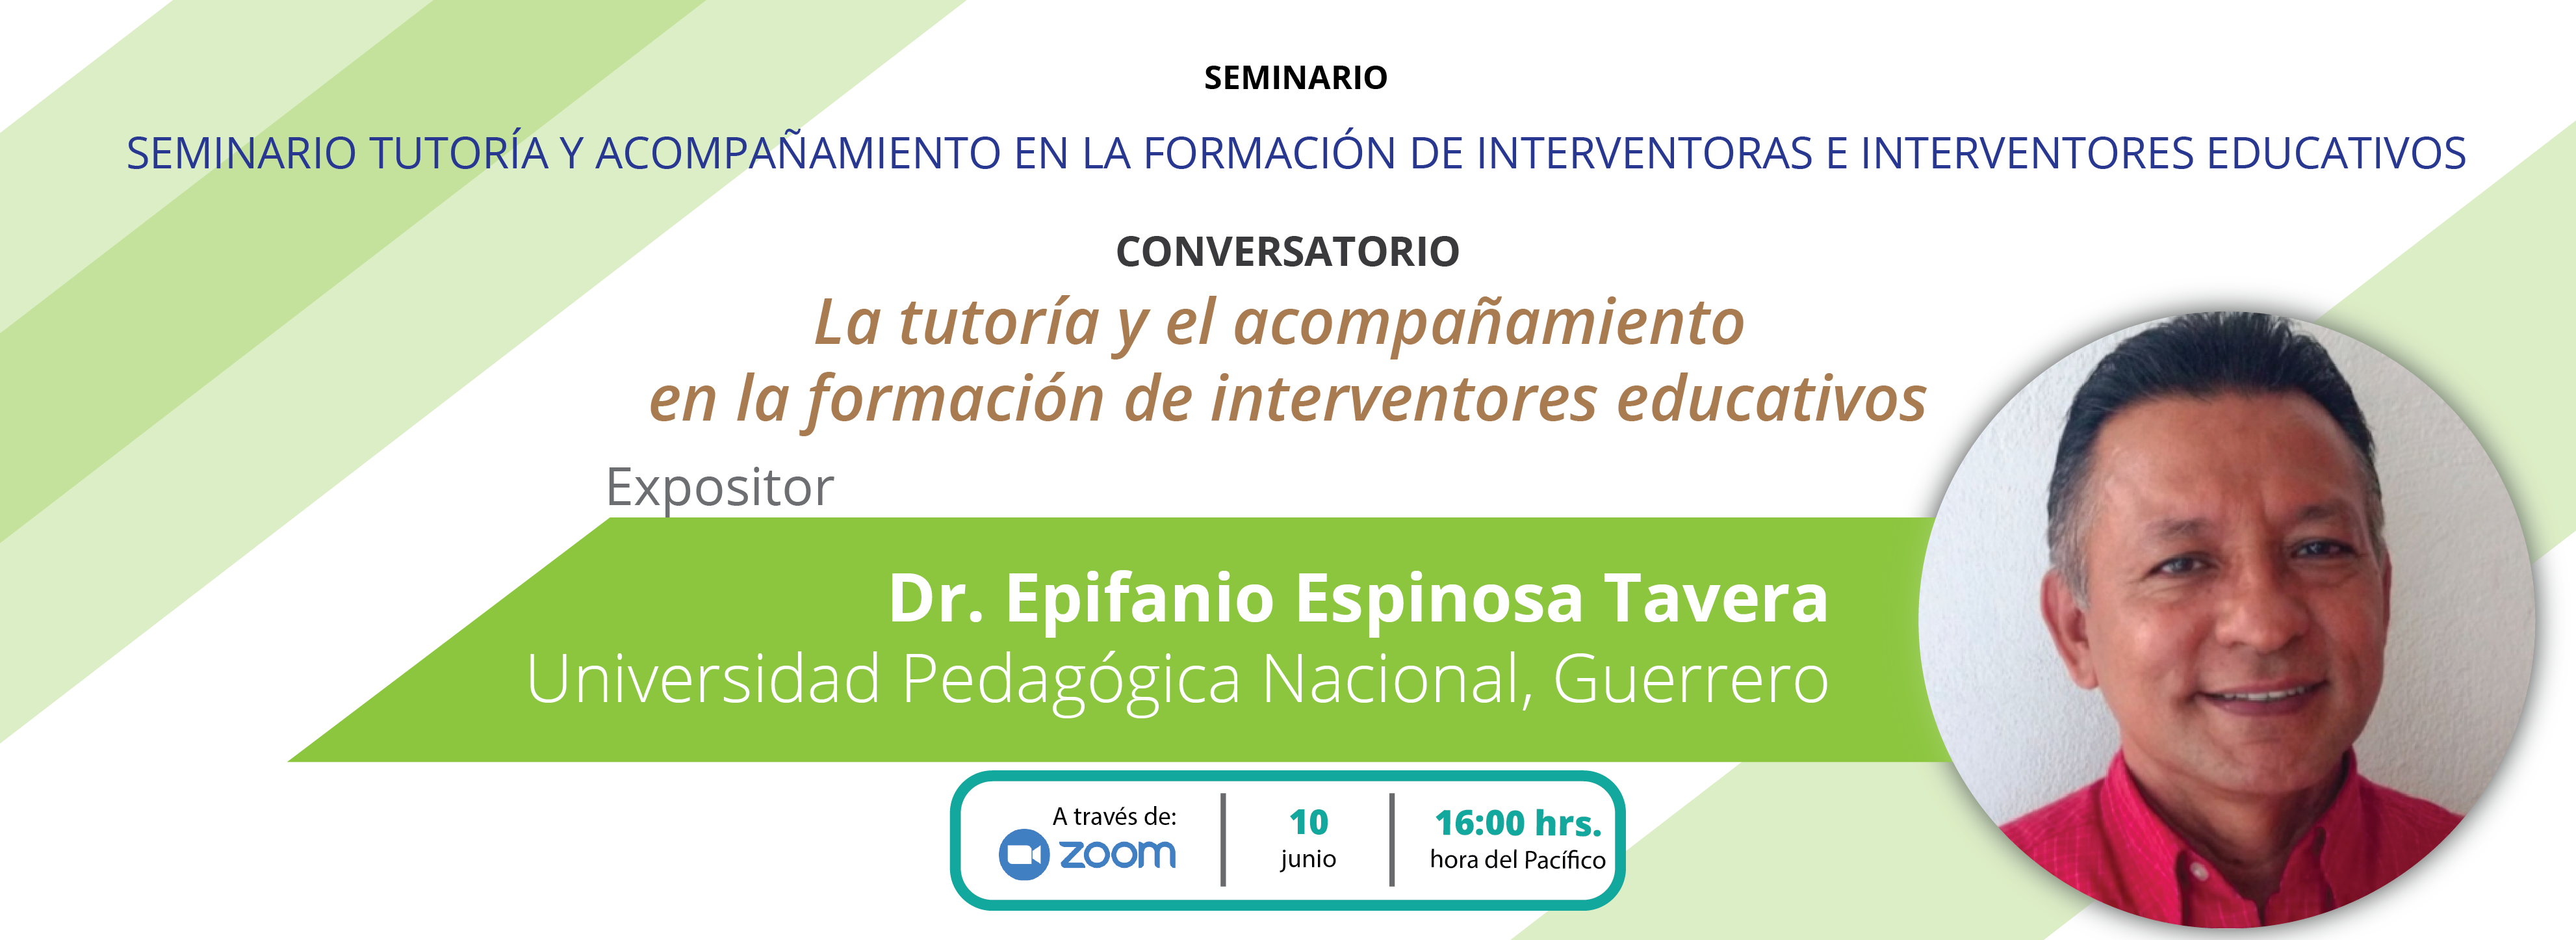 Invitacin_Seminario_Conversatorio_Dr_Epifanio_Espinosa_Tavera_banner_web